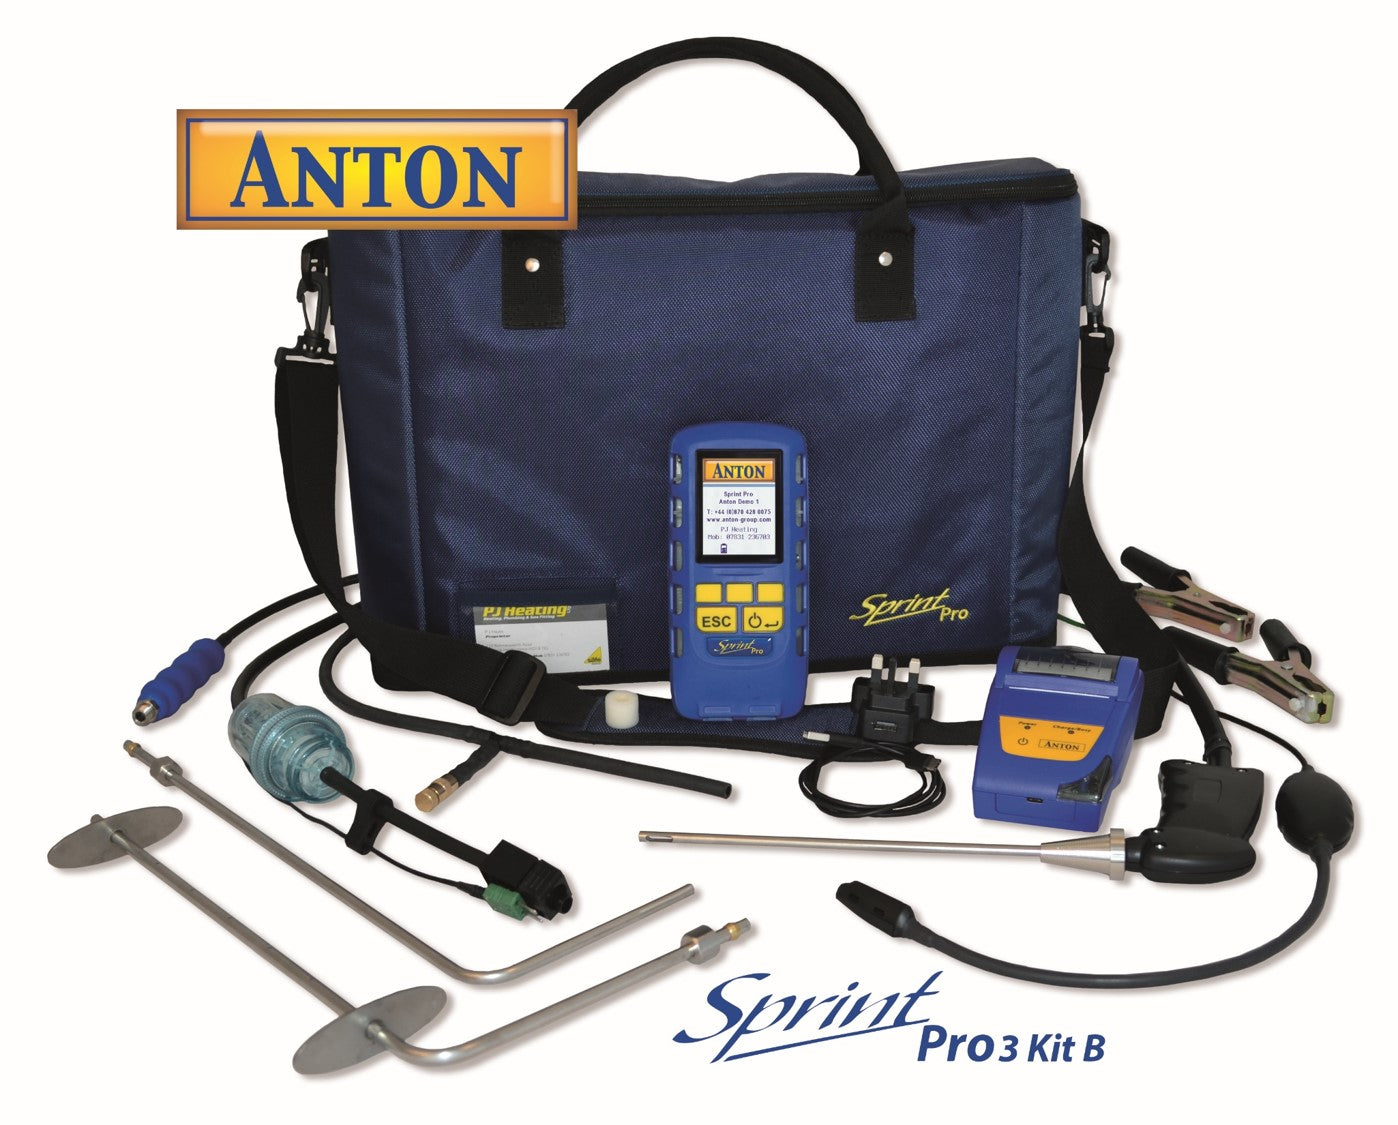 Anton Sprint Pro 3 Kit B Flue Gas Analyser